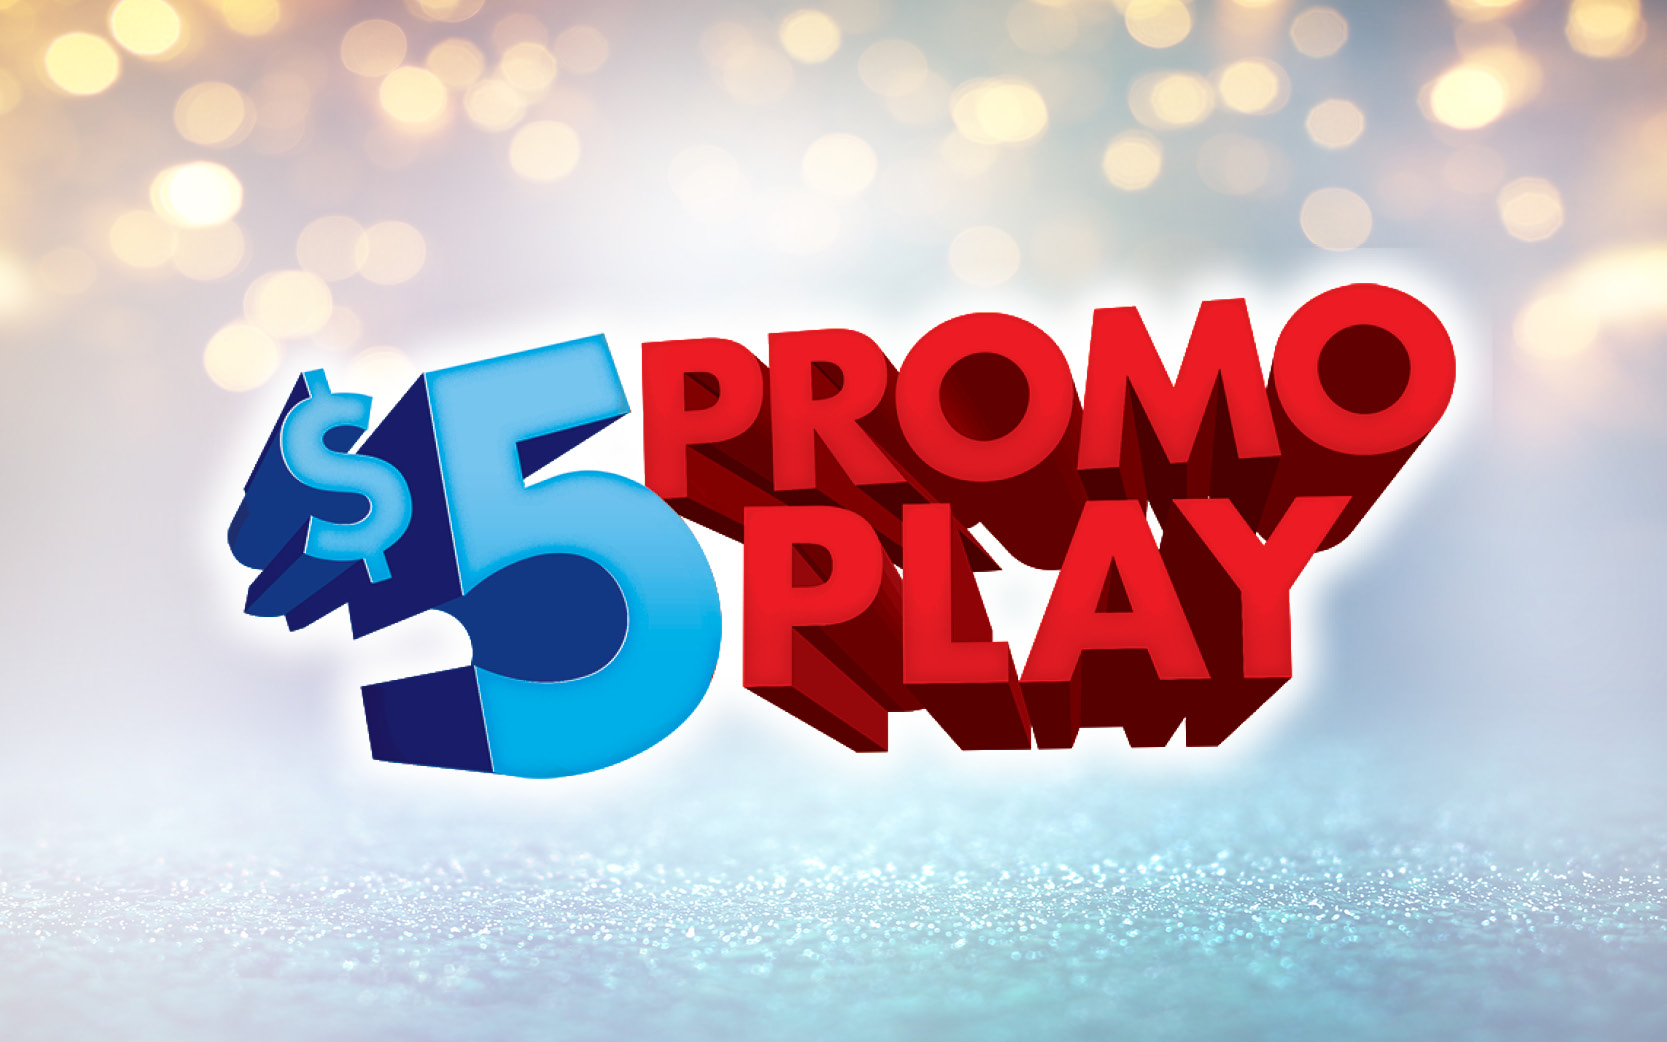 $5 Promo Play